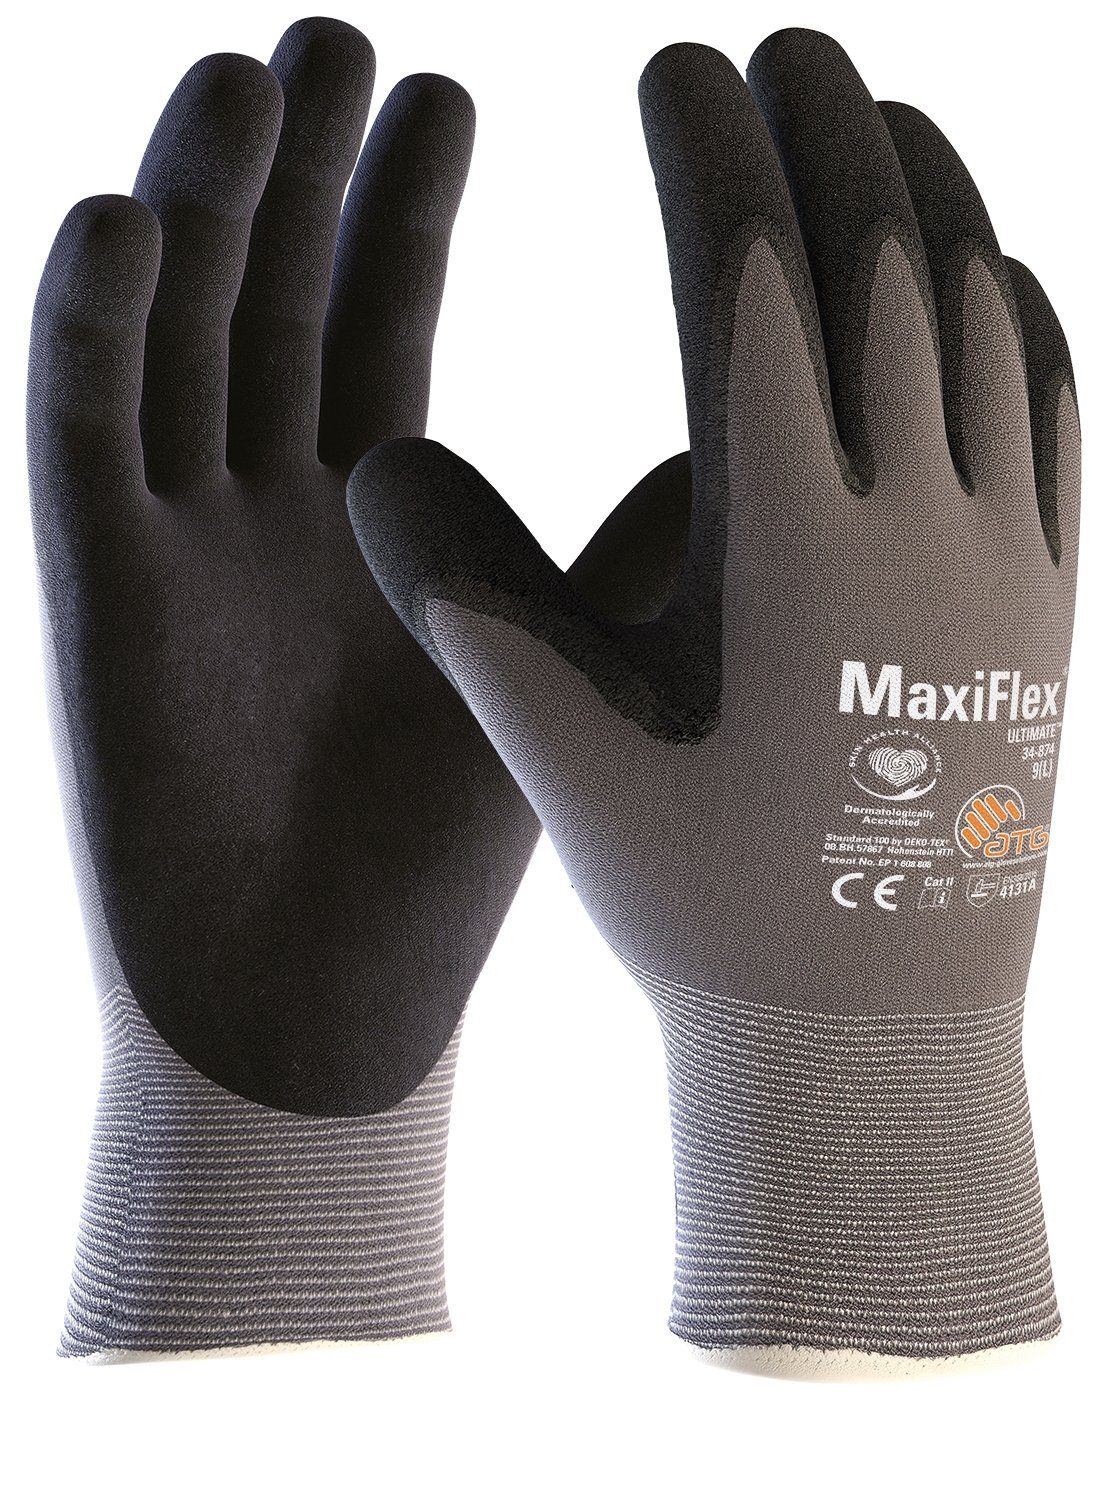 ATG Montage-Handschuhe MaxiFlex Ultimate 3 Paar